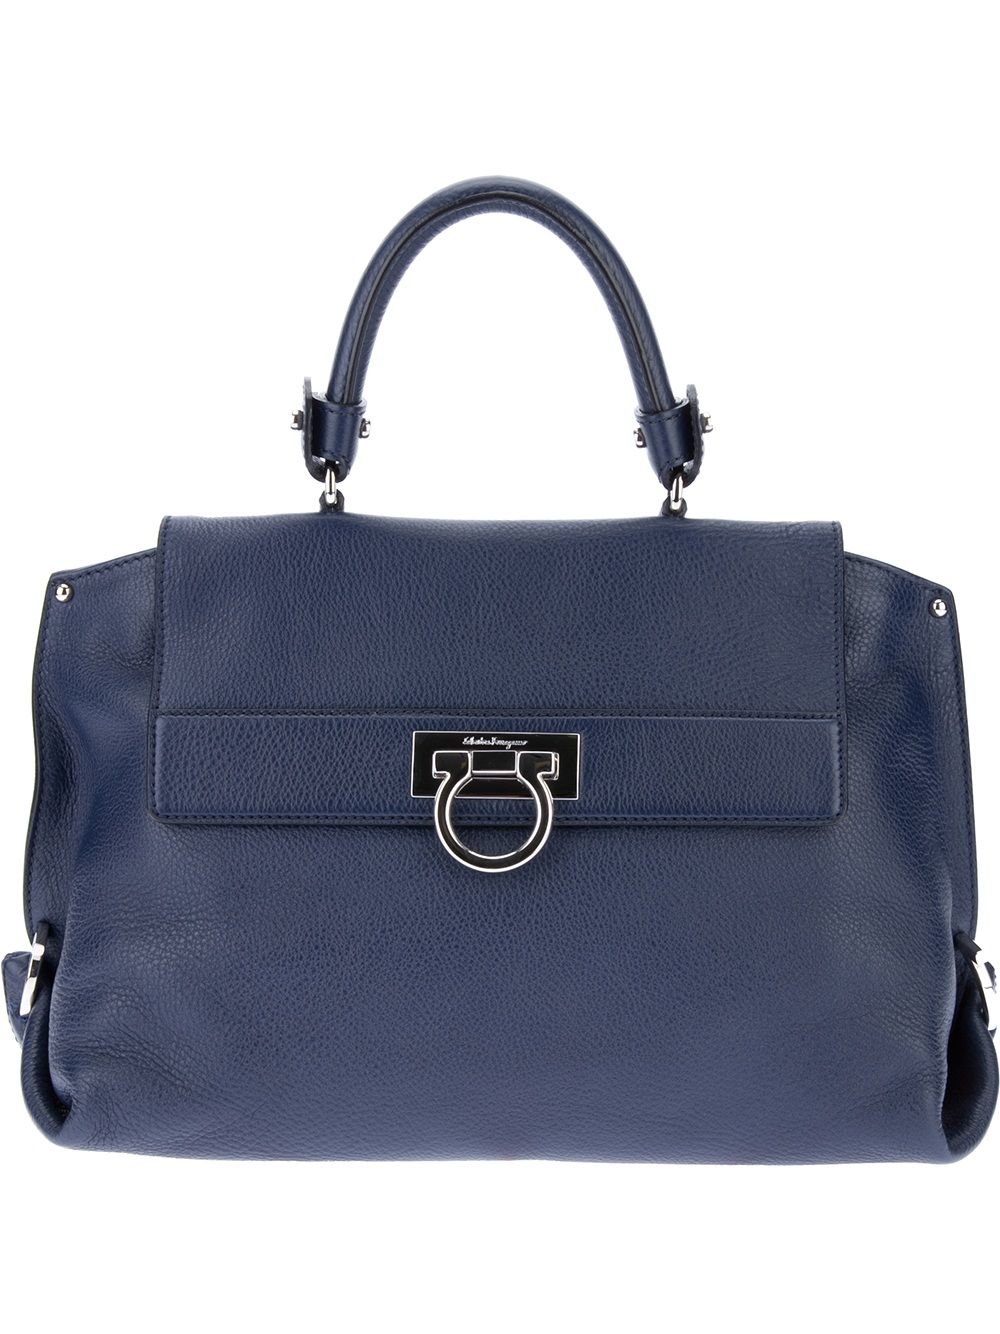 Ferragamo Sofia Medium Bag in Blue | Lyst